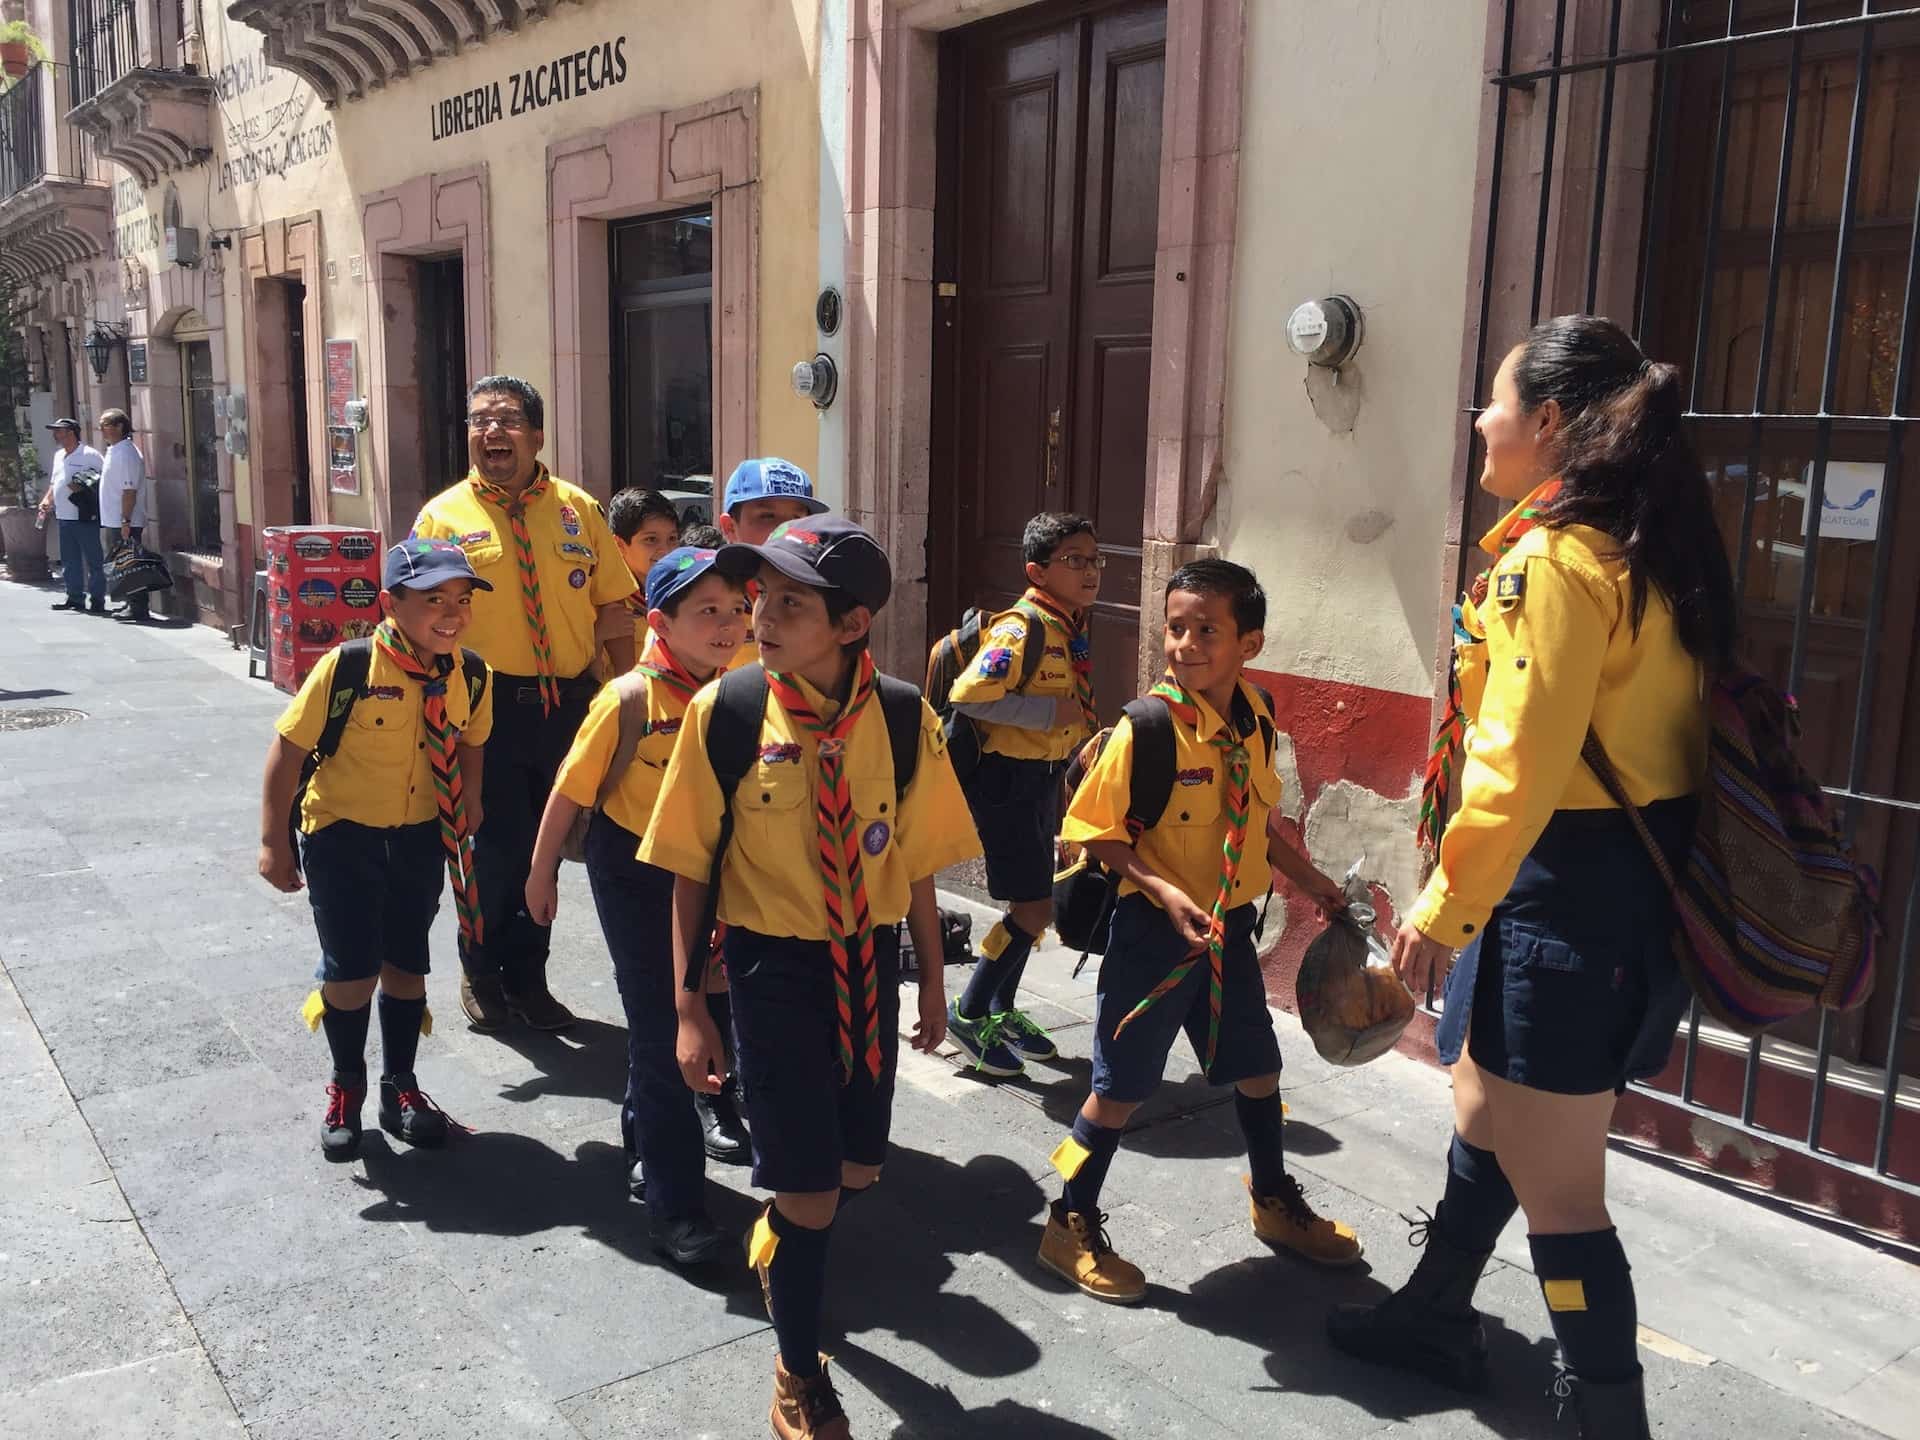 Scouts in Zacatecas Centro